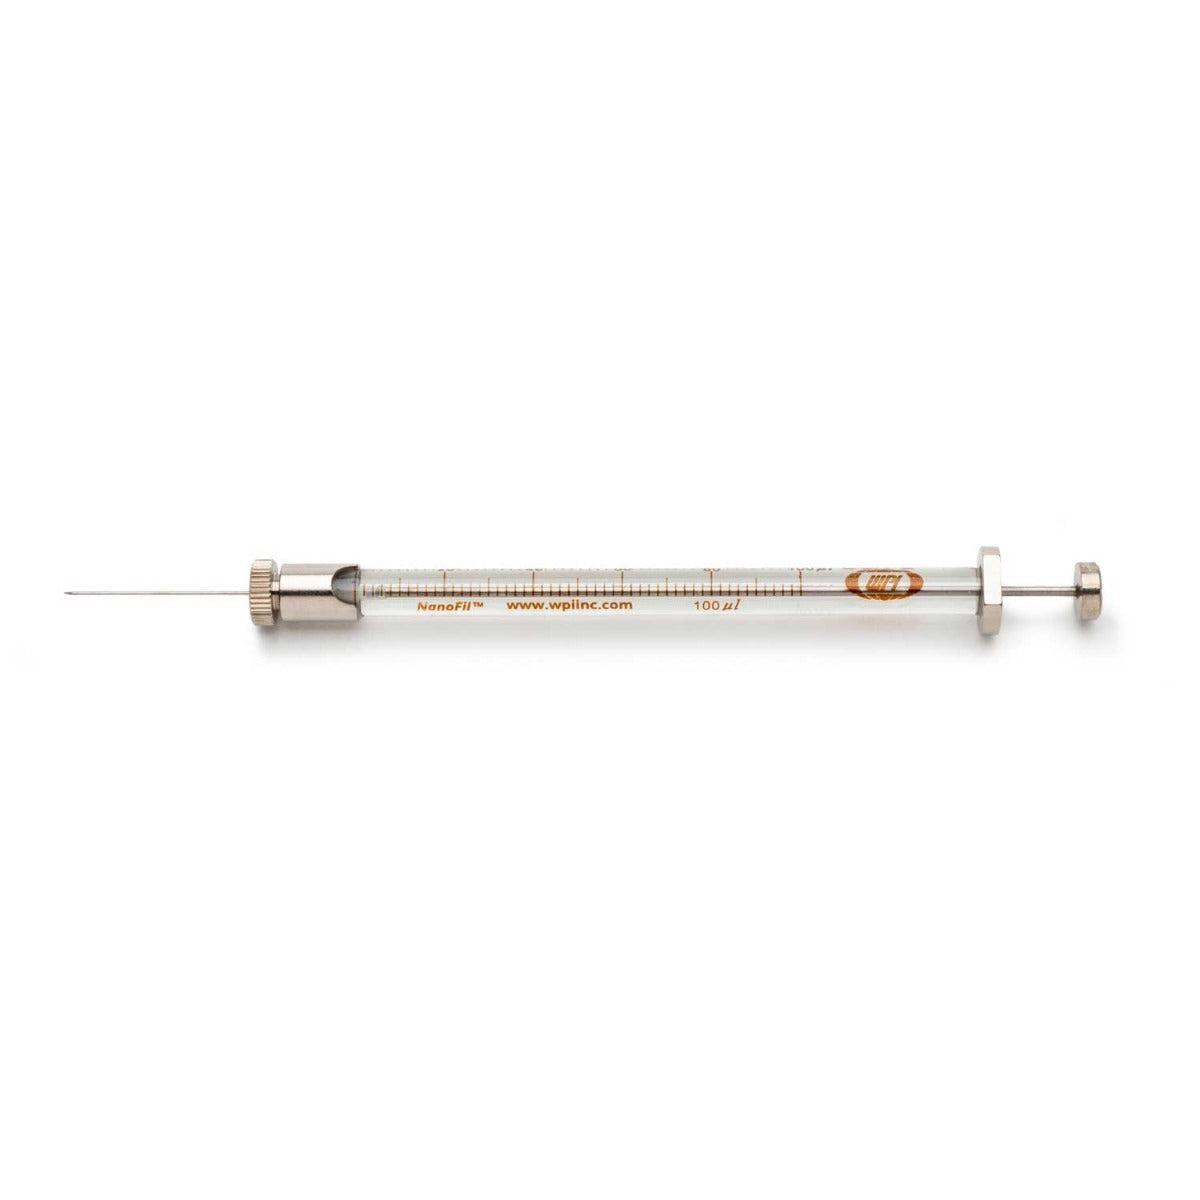 Sub-Microliter Injection System-NANOFIL-100